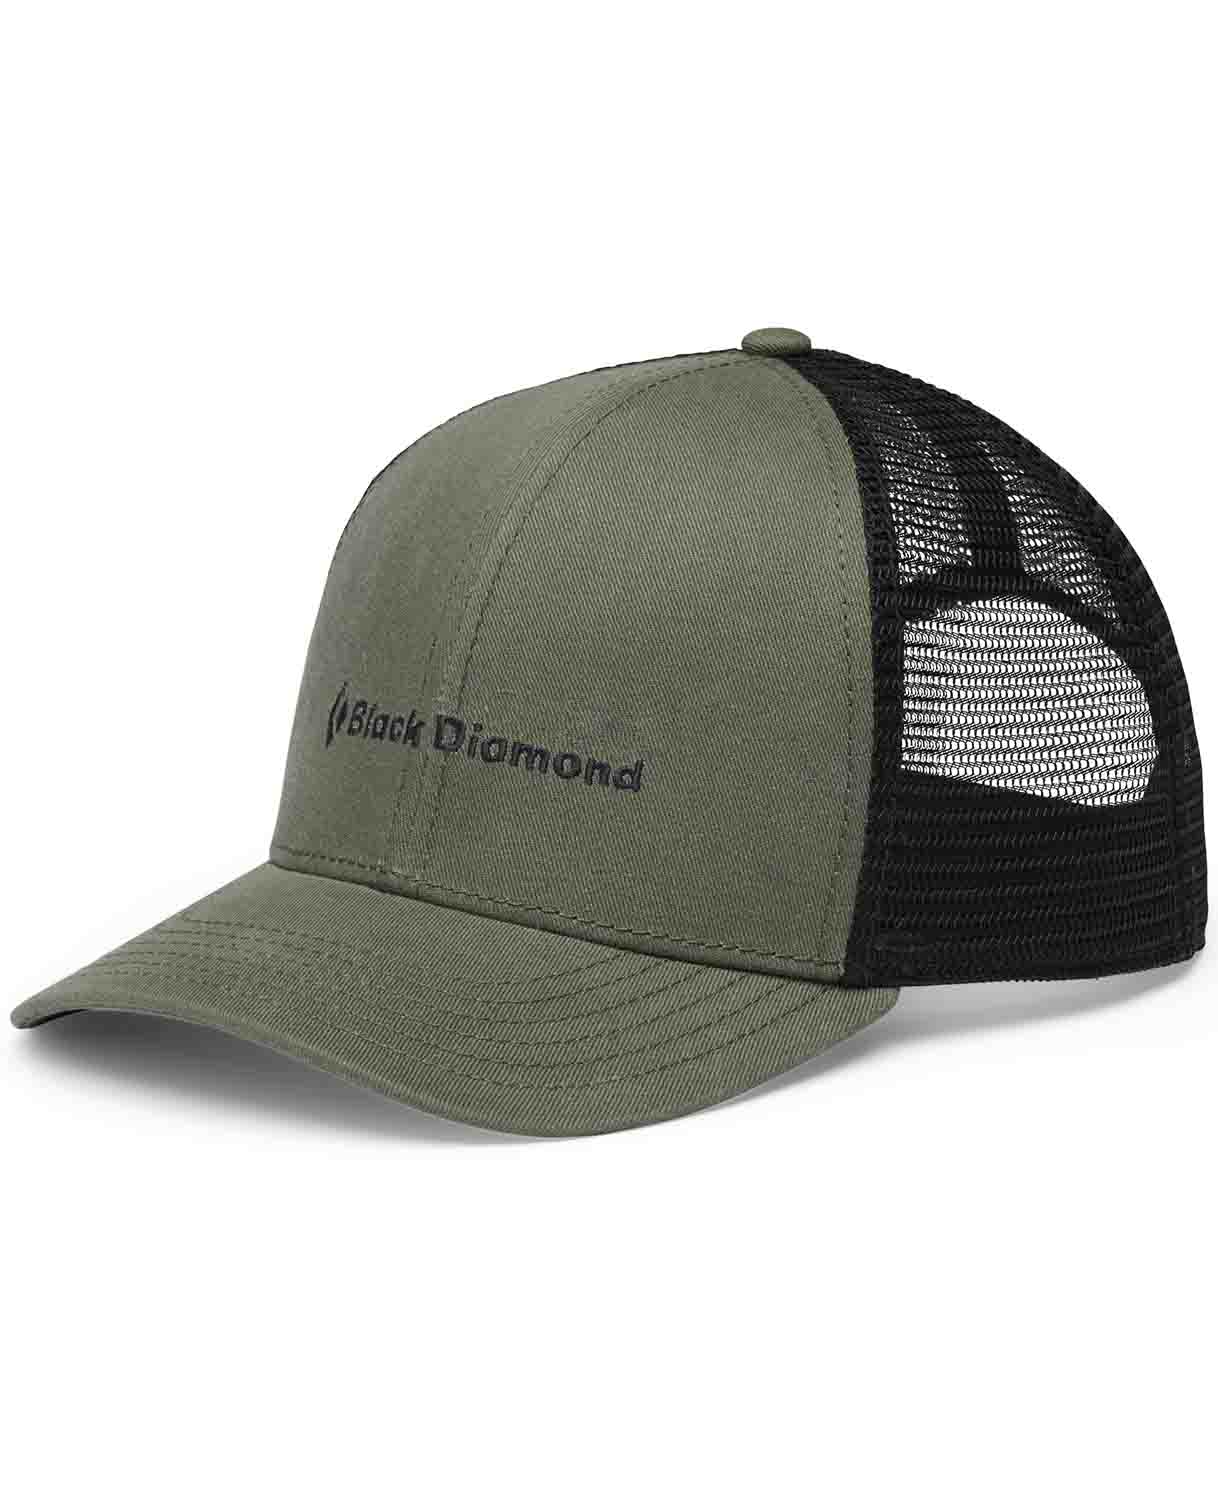 【 Black Diamond 】 S24 Trucker Hat 鴨舌帽